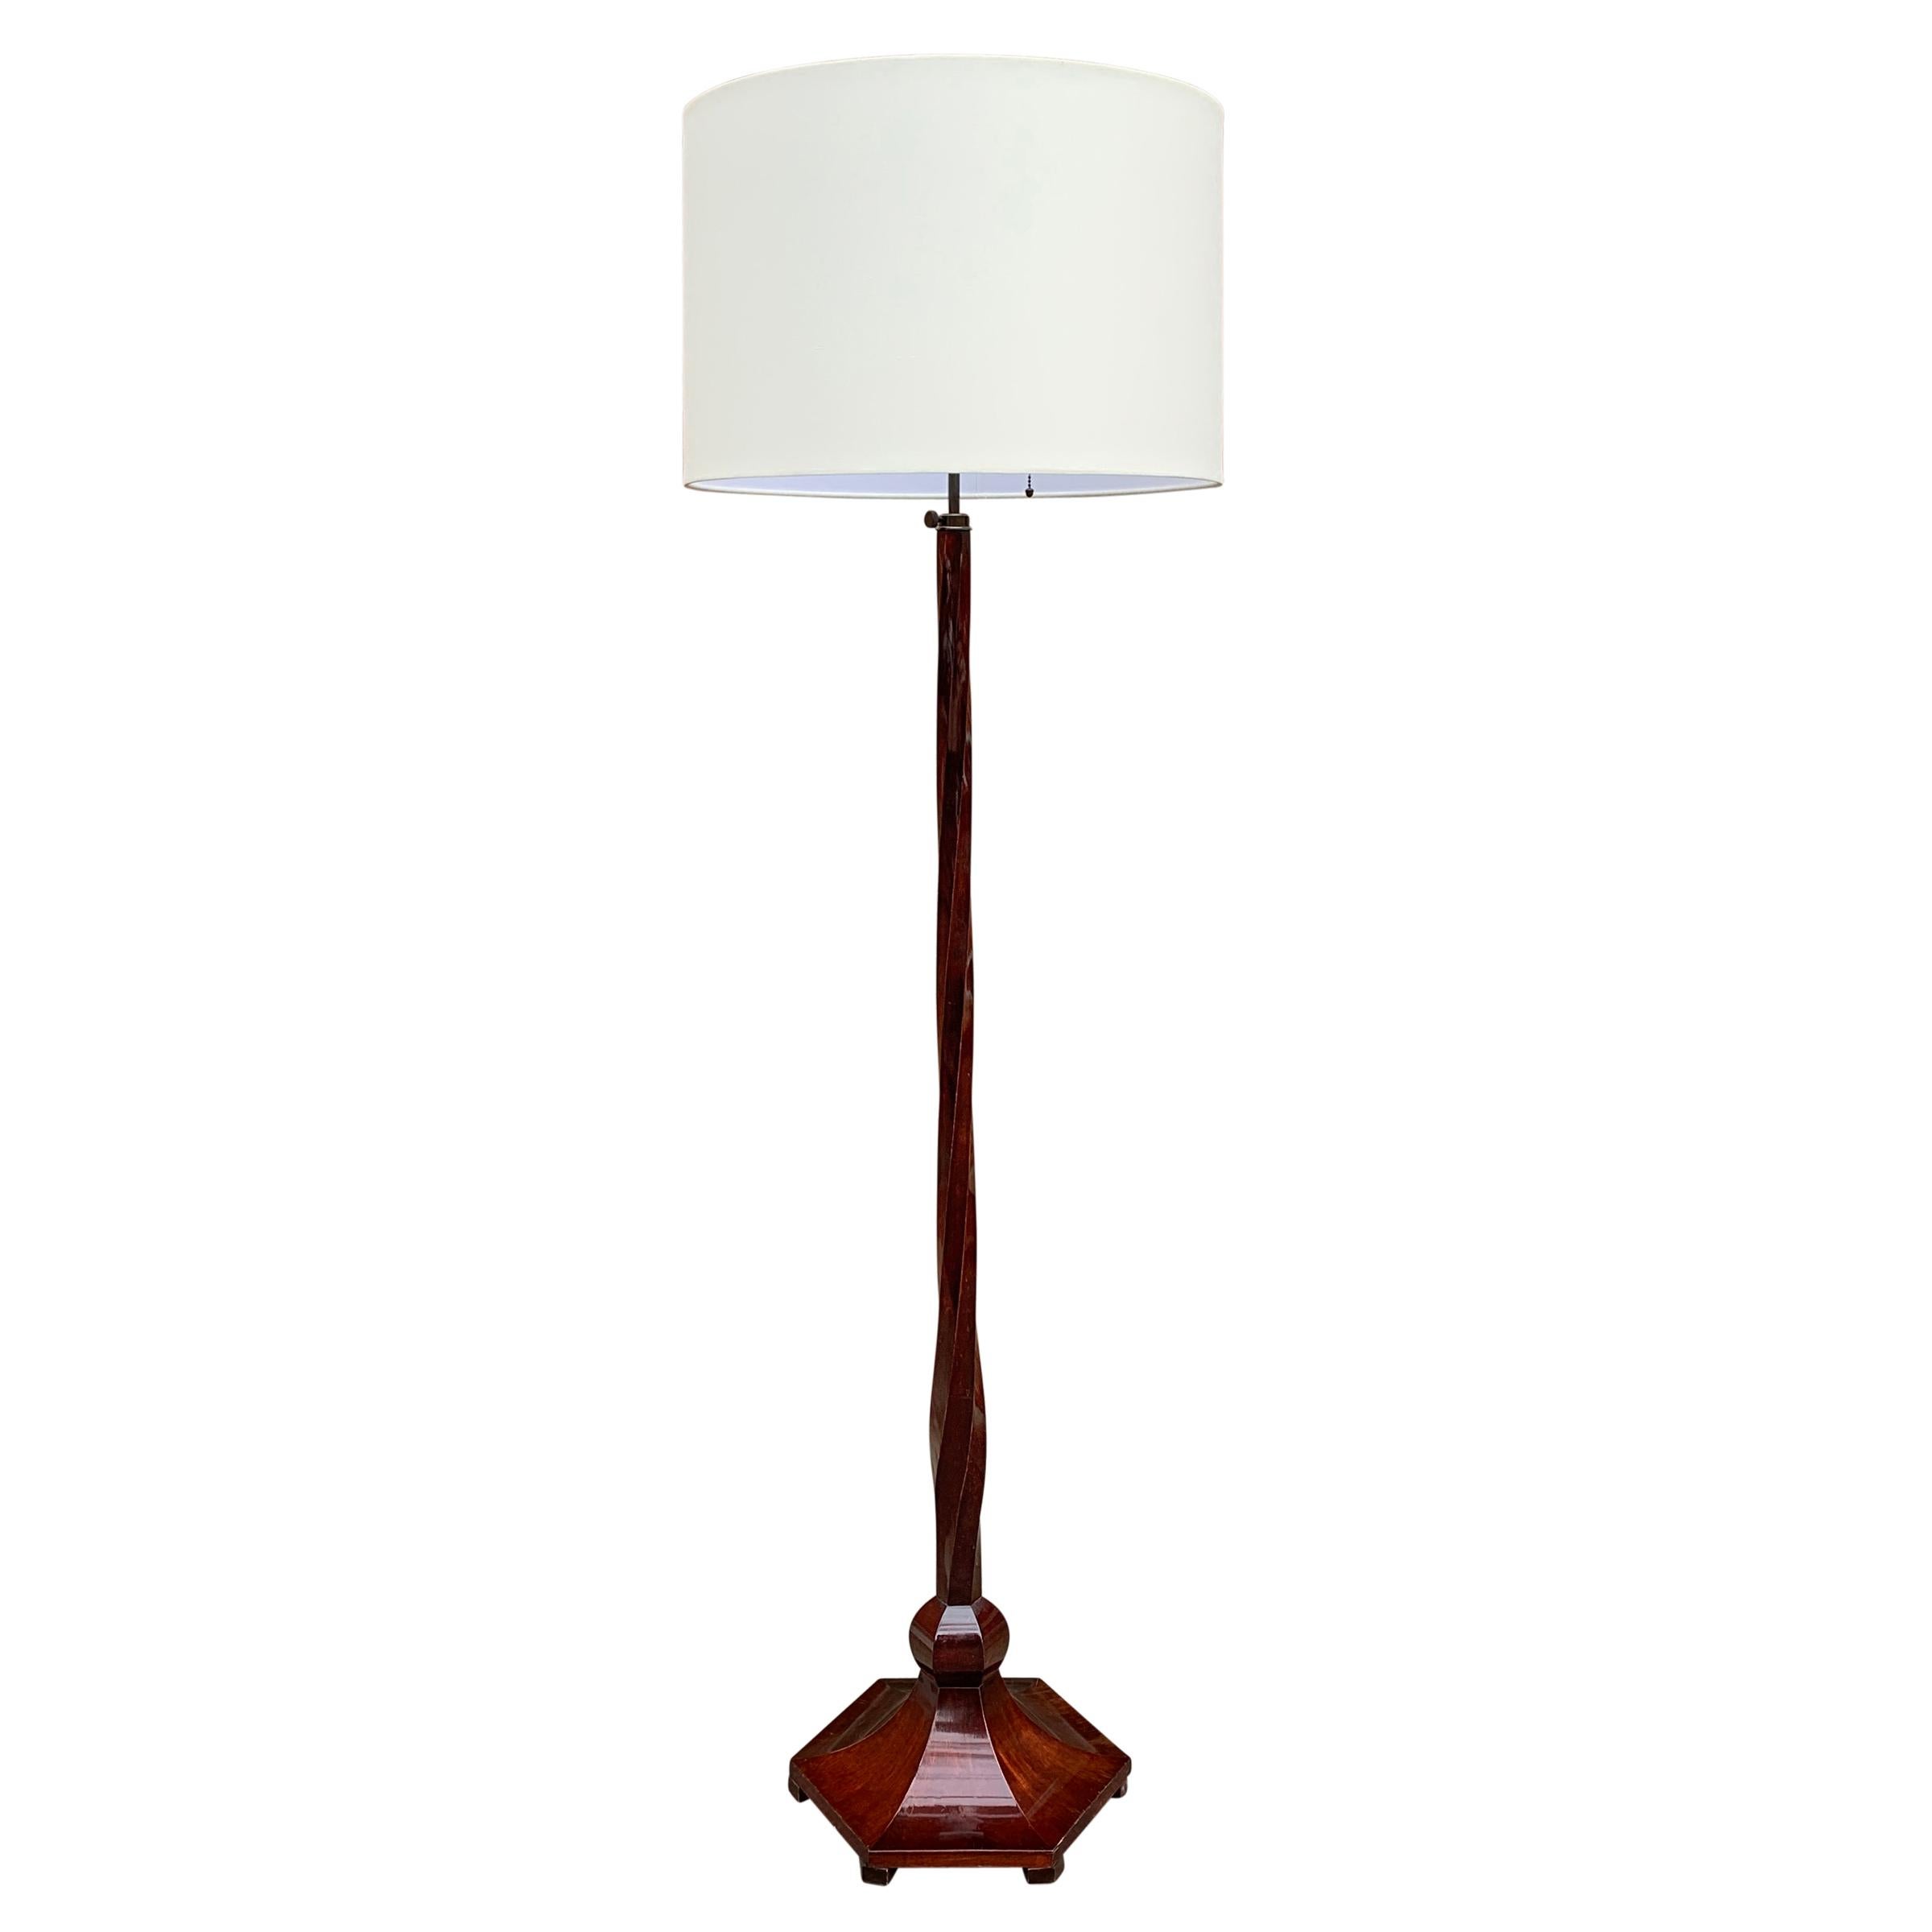 Italian Art Deco Floor Lamp In Good Condition For Sale In Chicago, IL